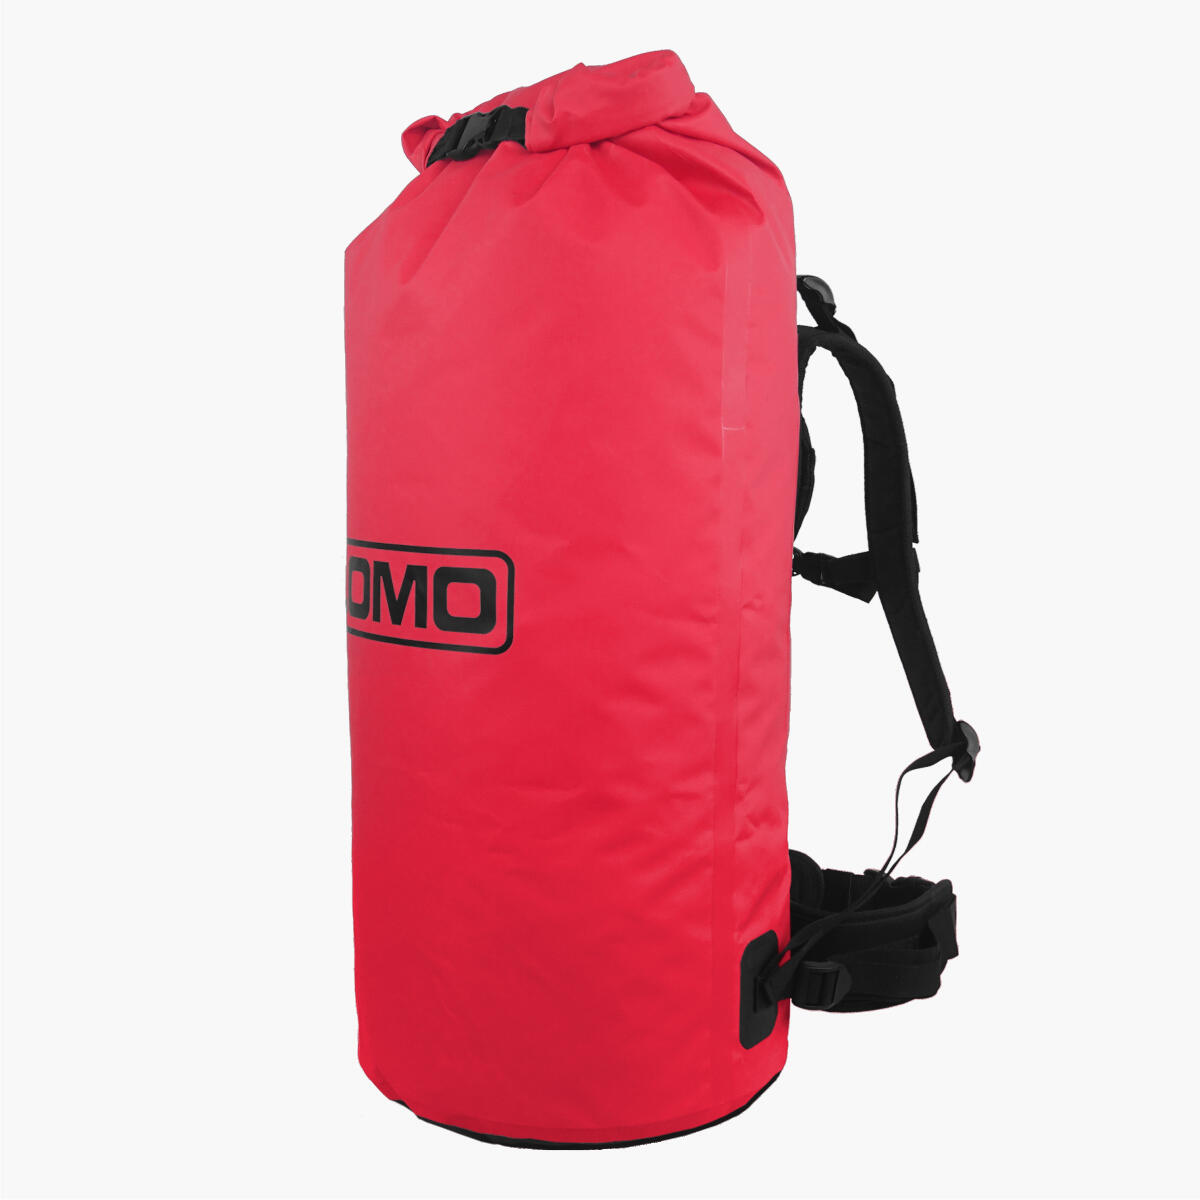 LOMO Lomo 60L Dry Bag Rucksack - Red